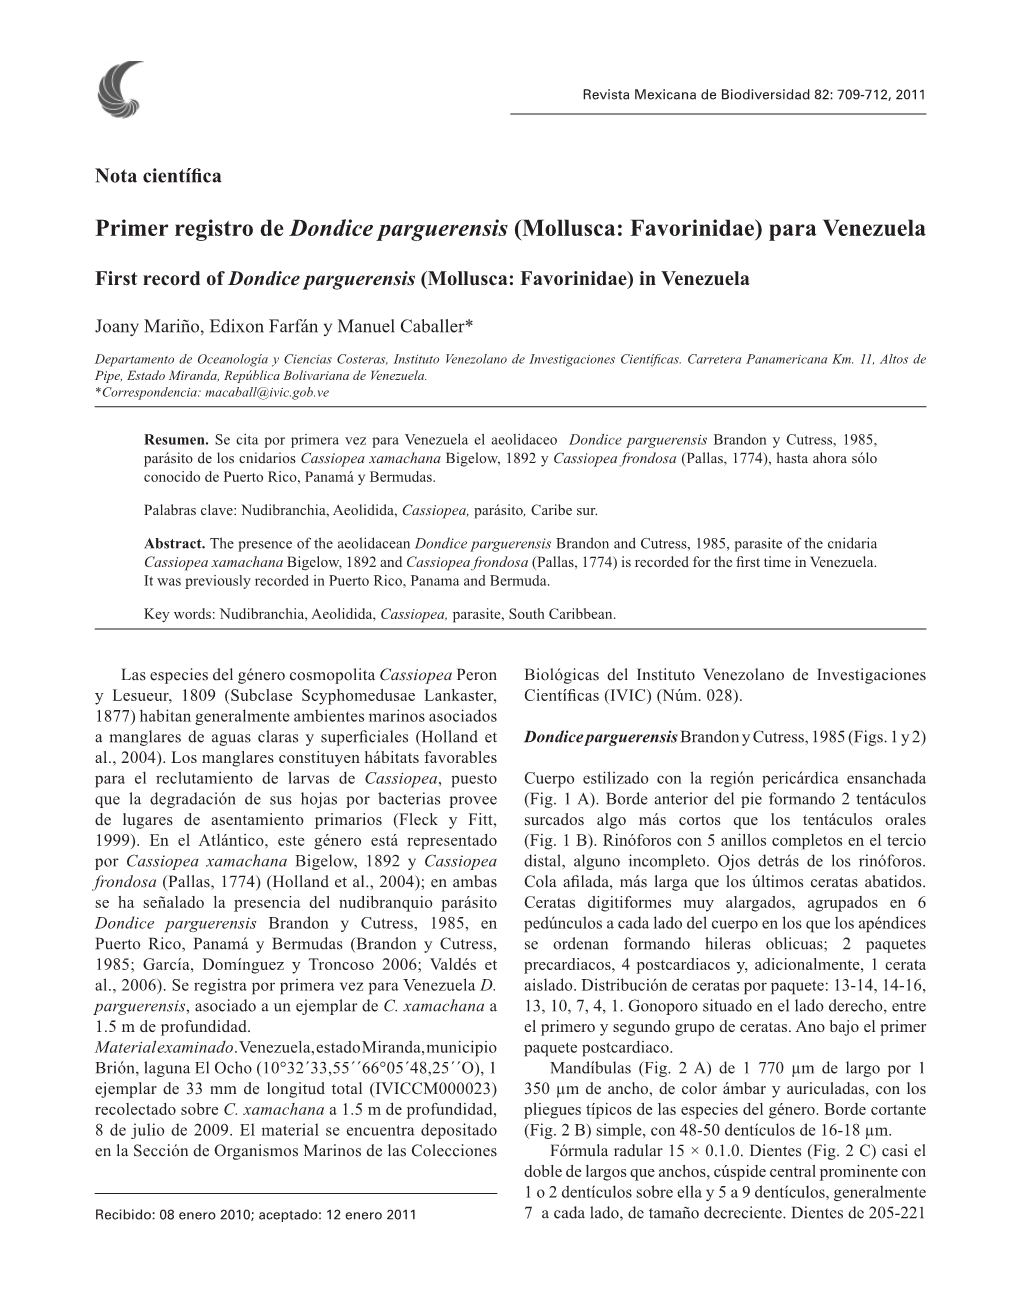 Primer Registro De Dondice Parguerensis (Mollusca: Favorinidae) Para Venezuela